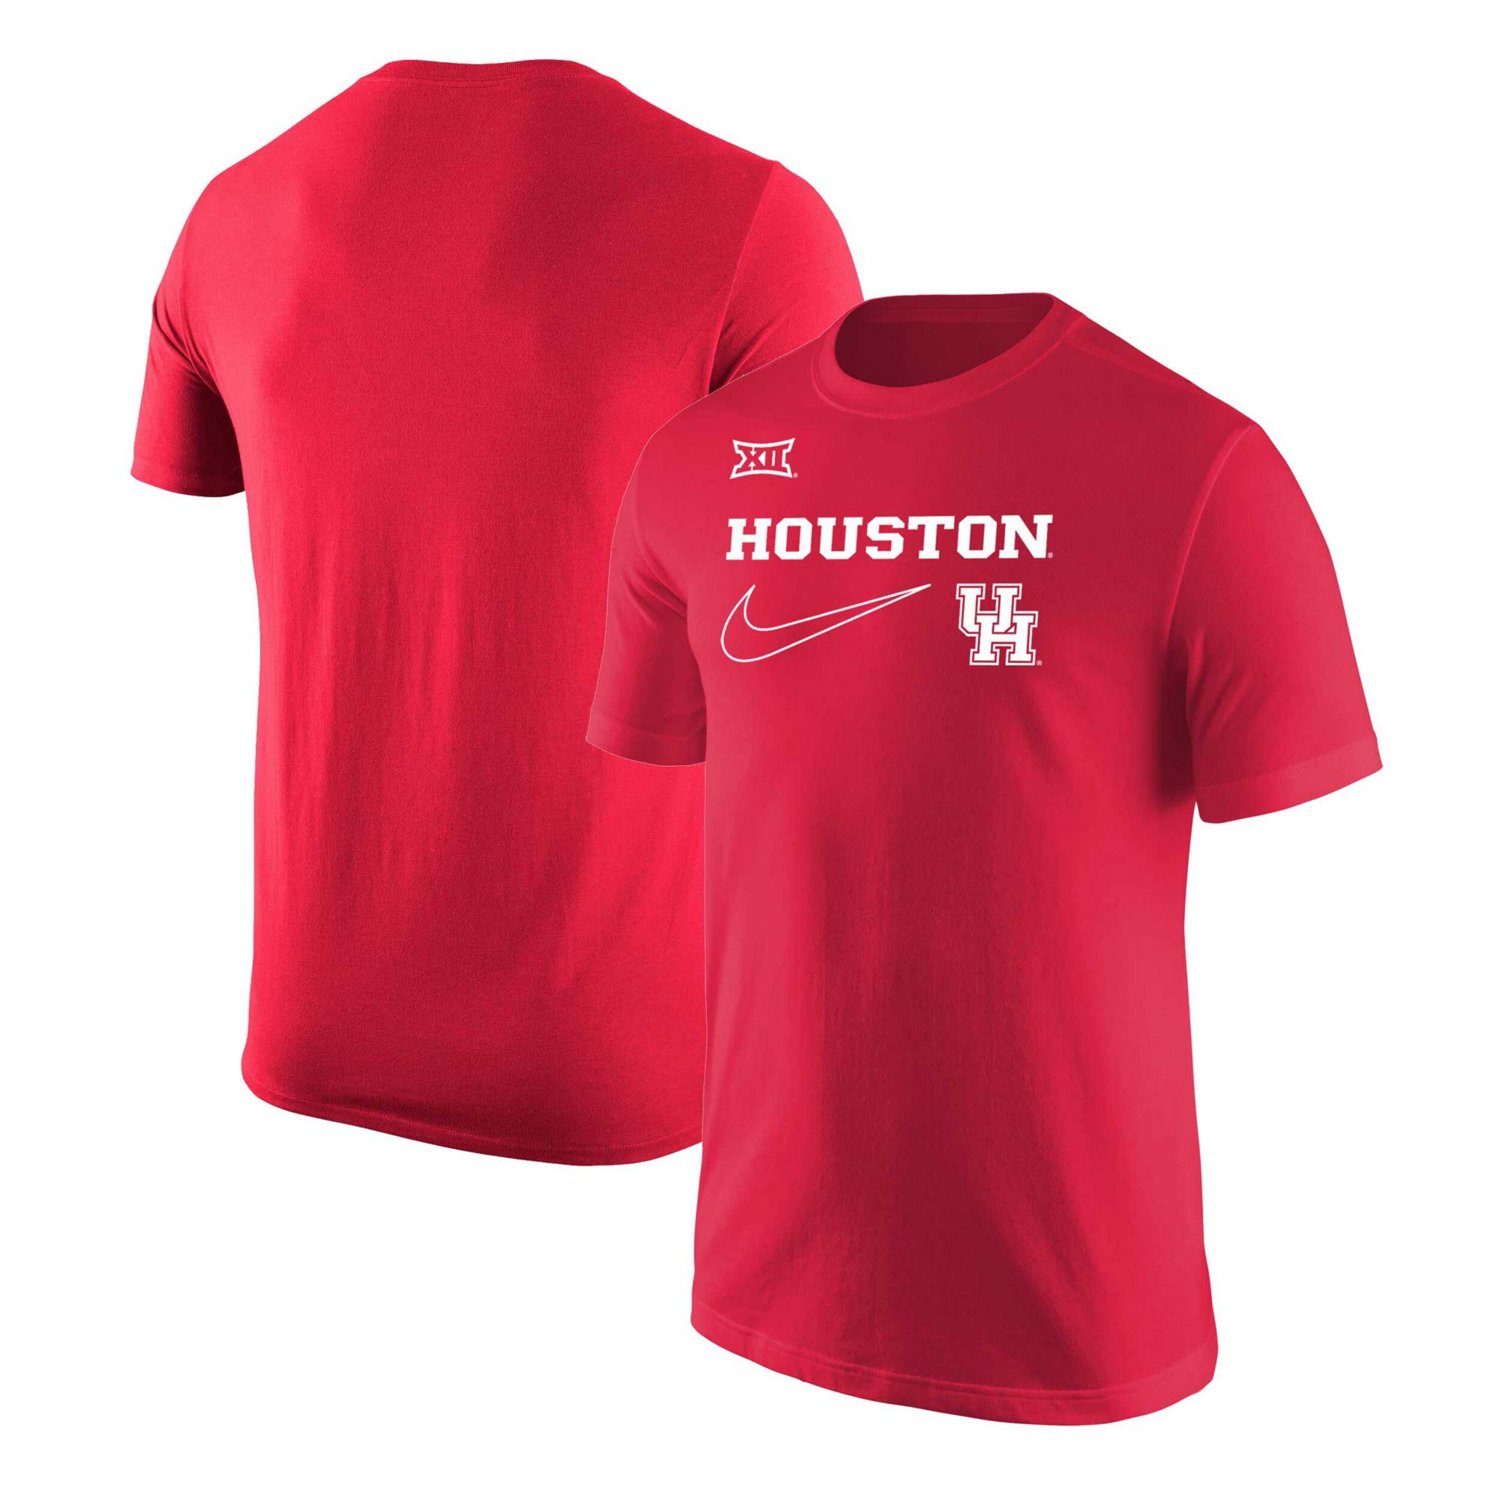 University of Houston Shirts, Apparel, & Gear